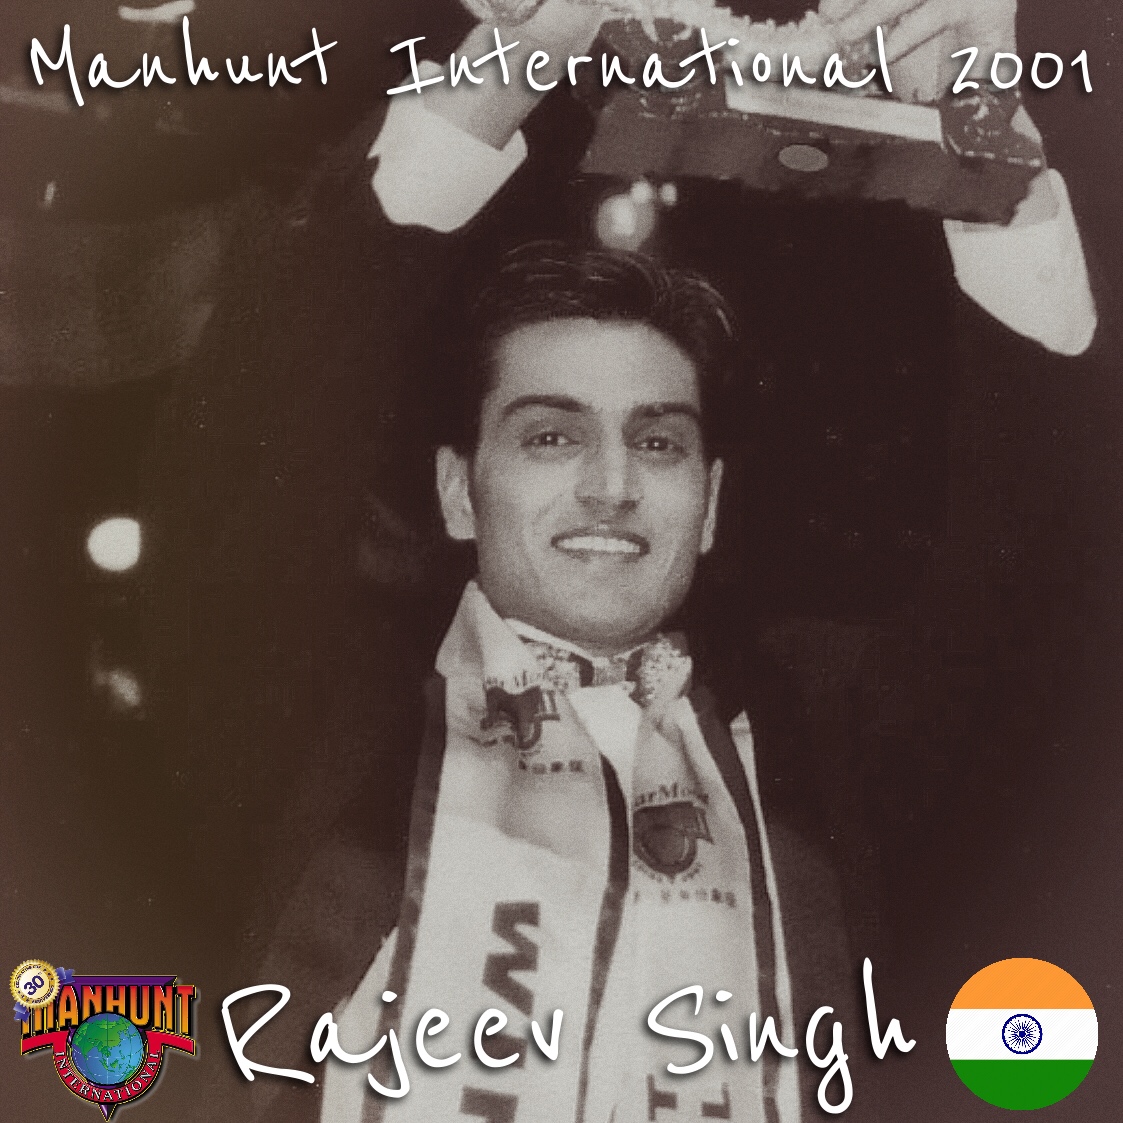 rajeev singh, manhunt international 2001. Enligh14